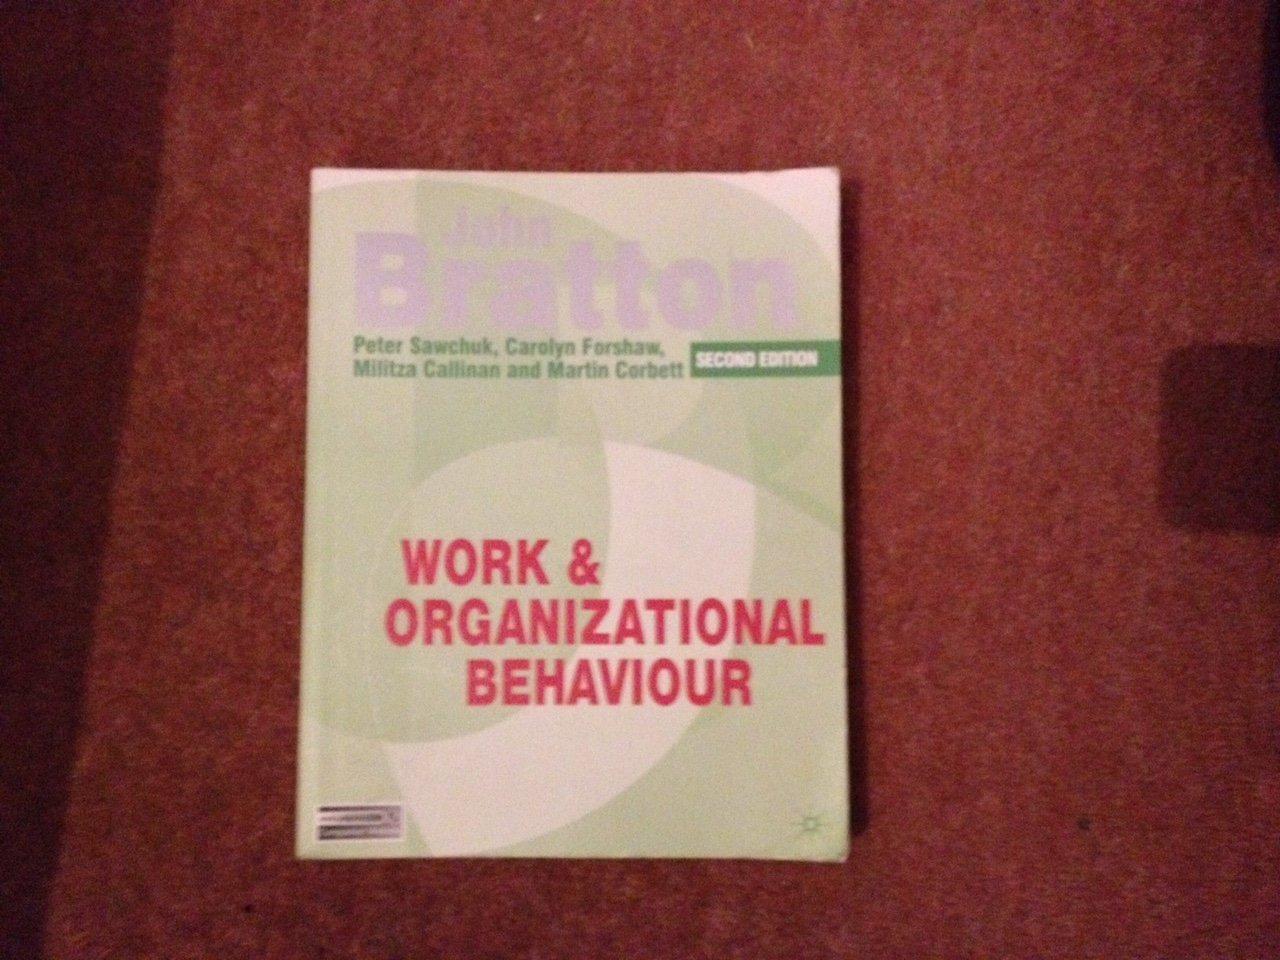 work and organizational behaviour understanding the workplace 2nd edition john bratton, carolyn forshaw,